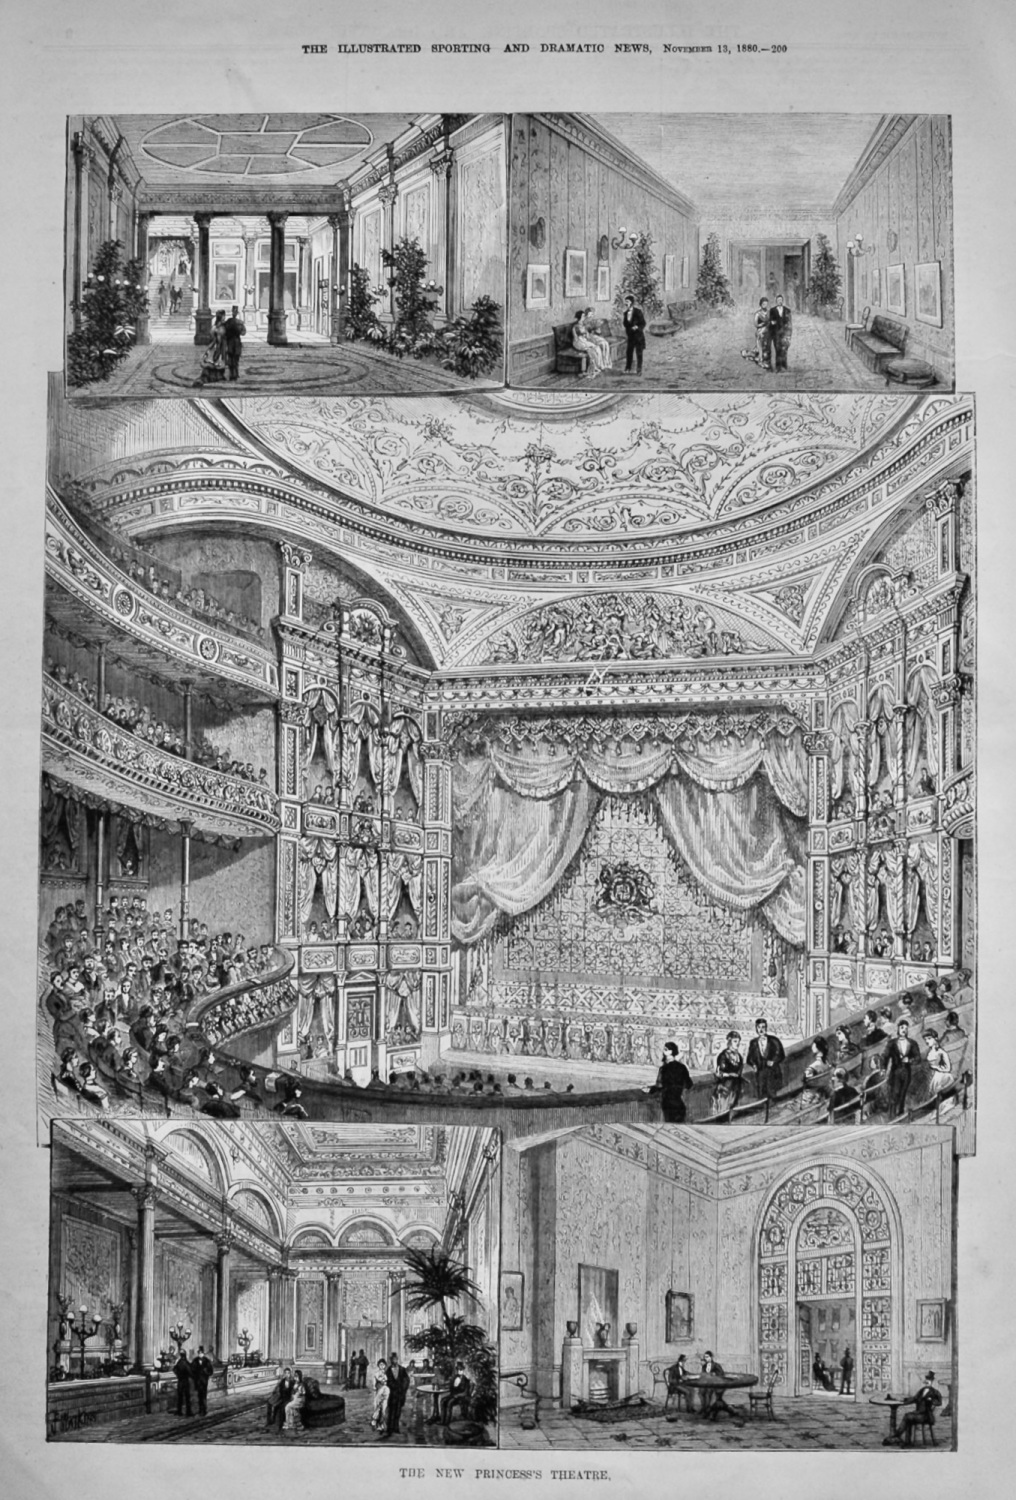 The New Princess's Theatre.  1880.